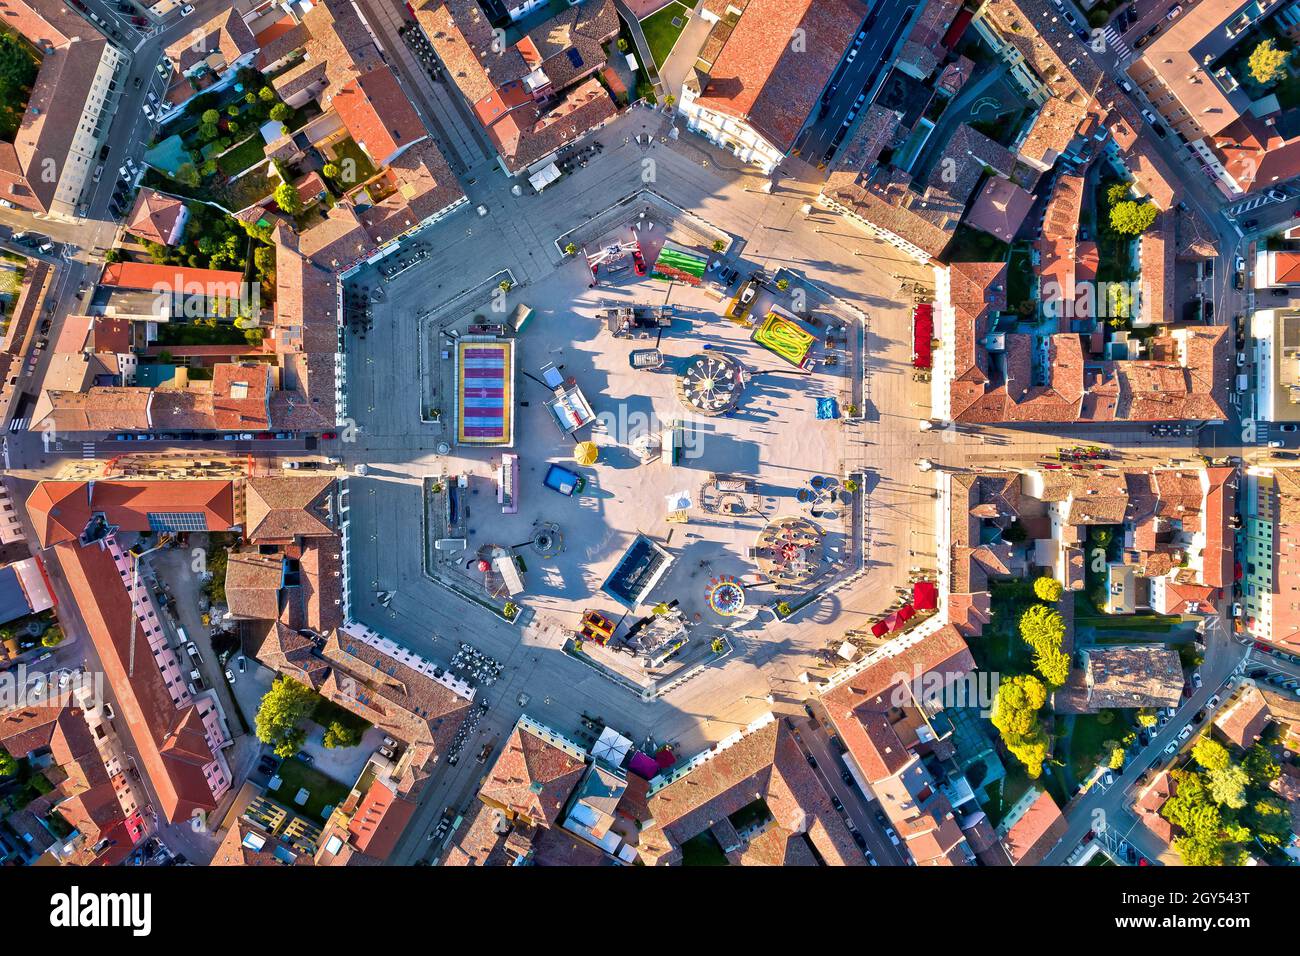 Town of Palmanova hexagonal square aerial view, UNESCO world heritage site in Friuli Venezia Giulia region of Italy Stock Photo